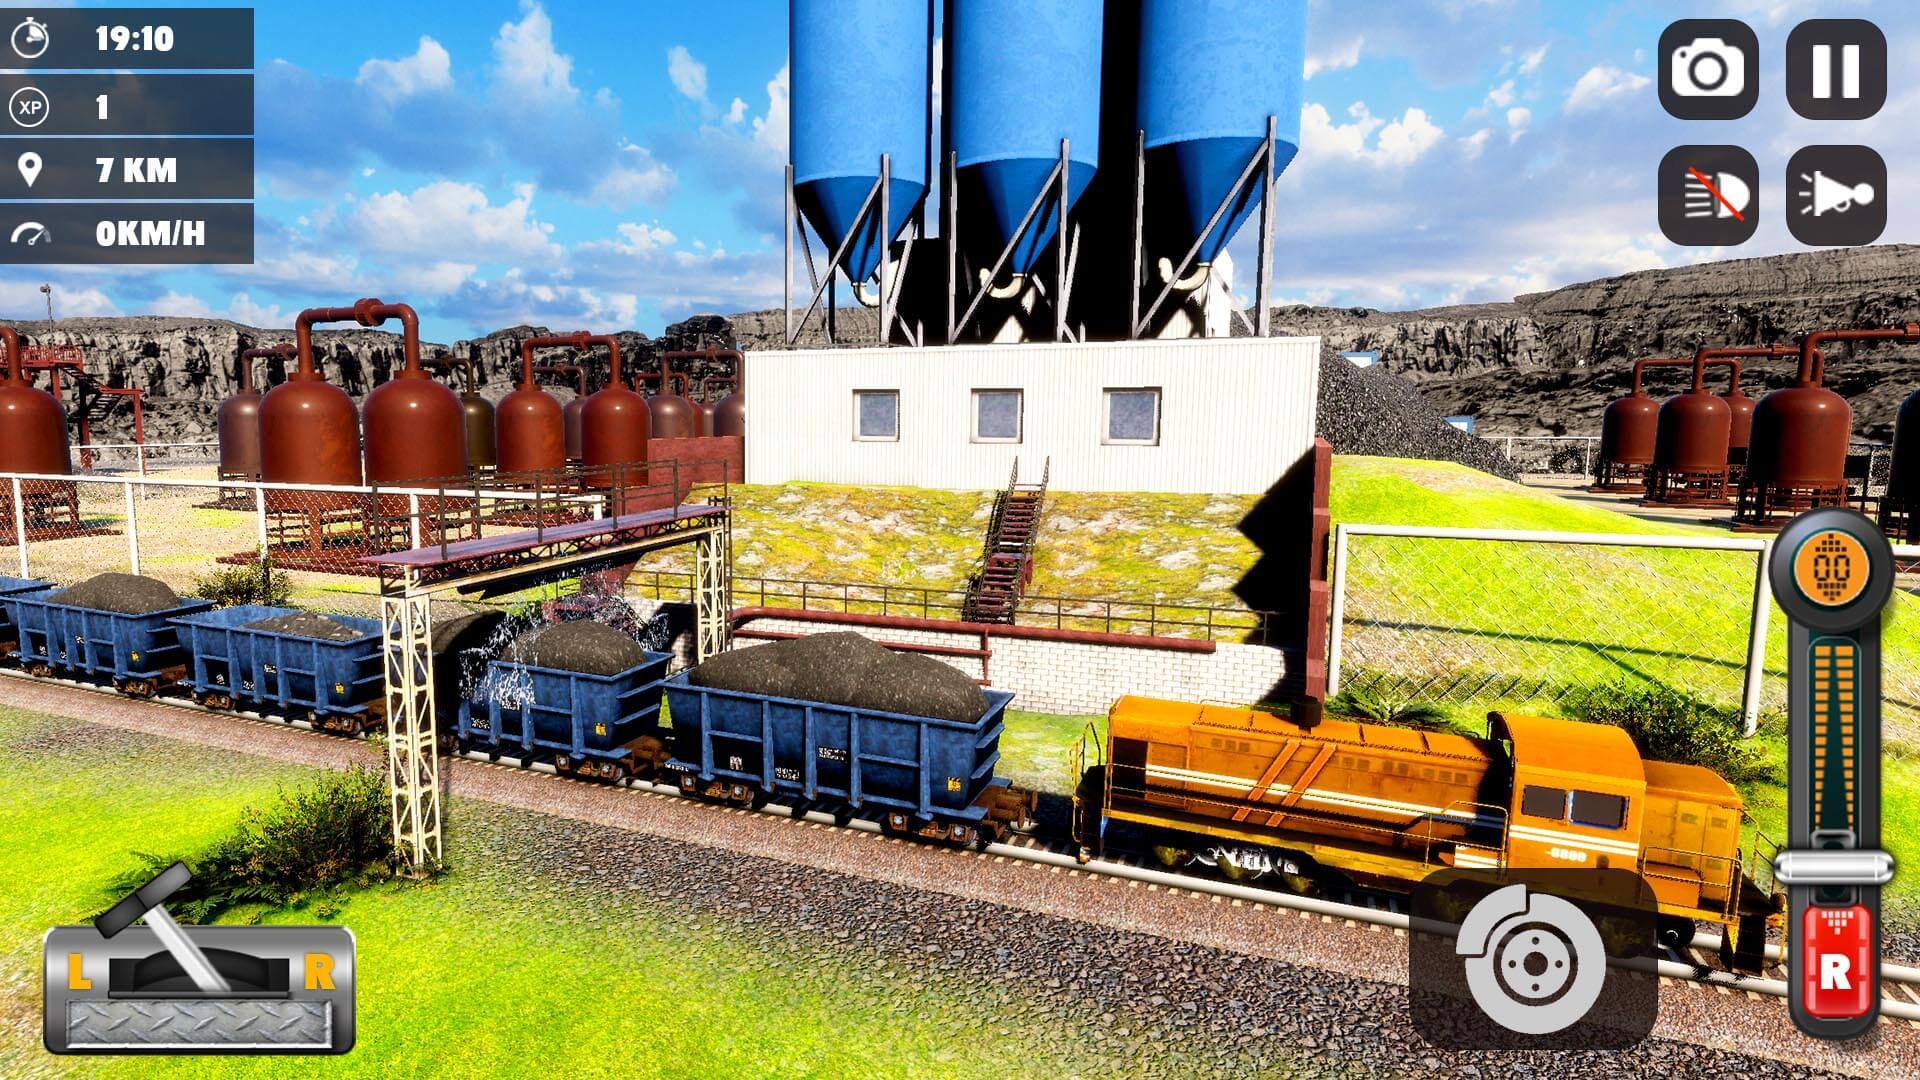 Download Mining Train Construction Game on PC (Emulator) - LDPlayer